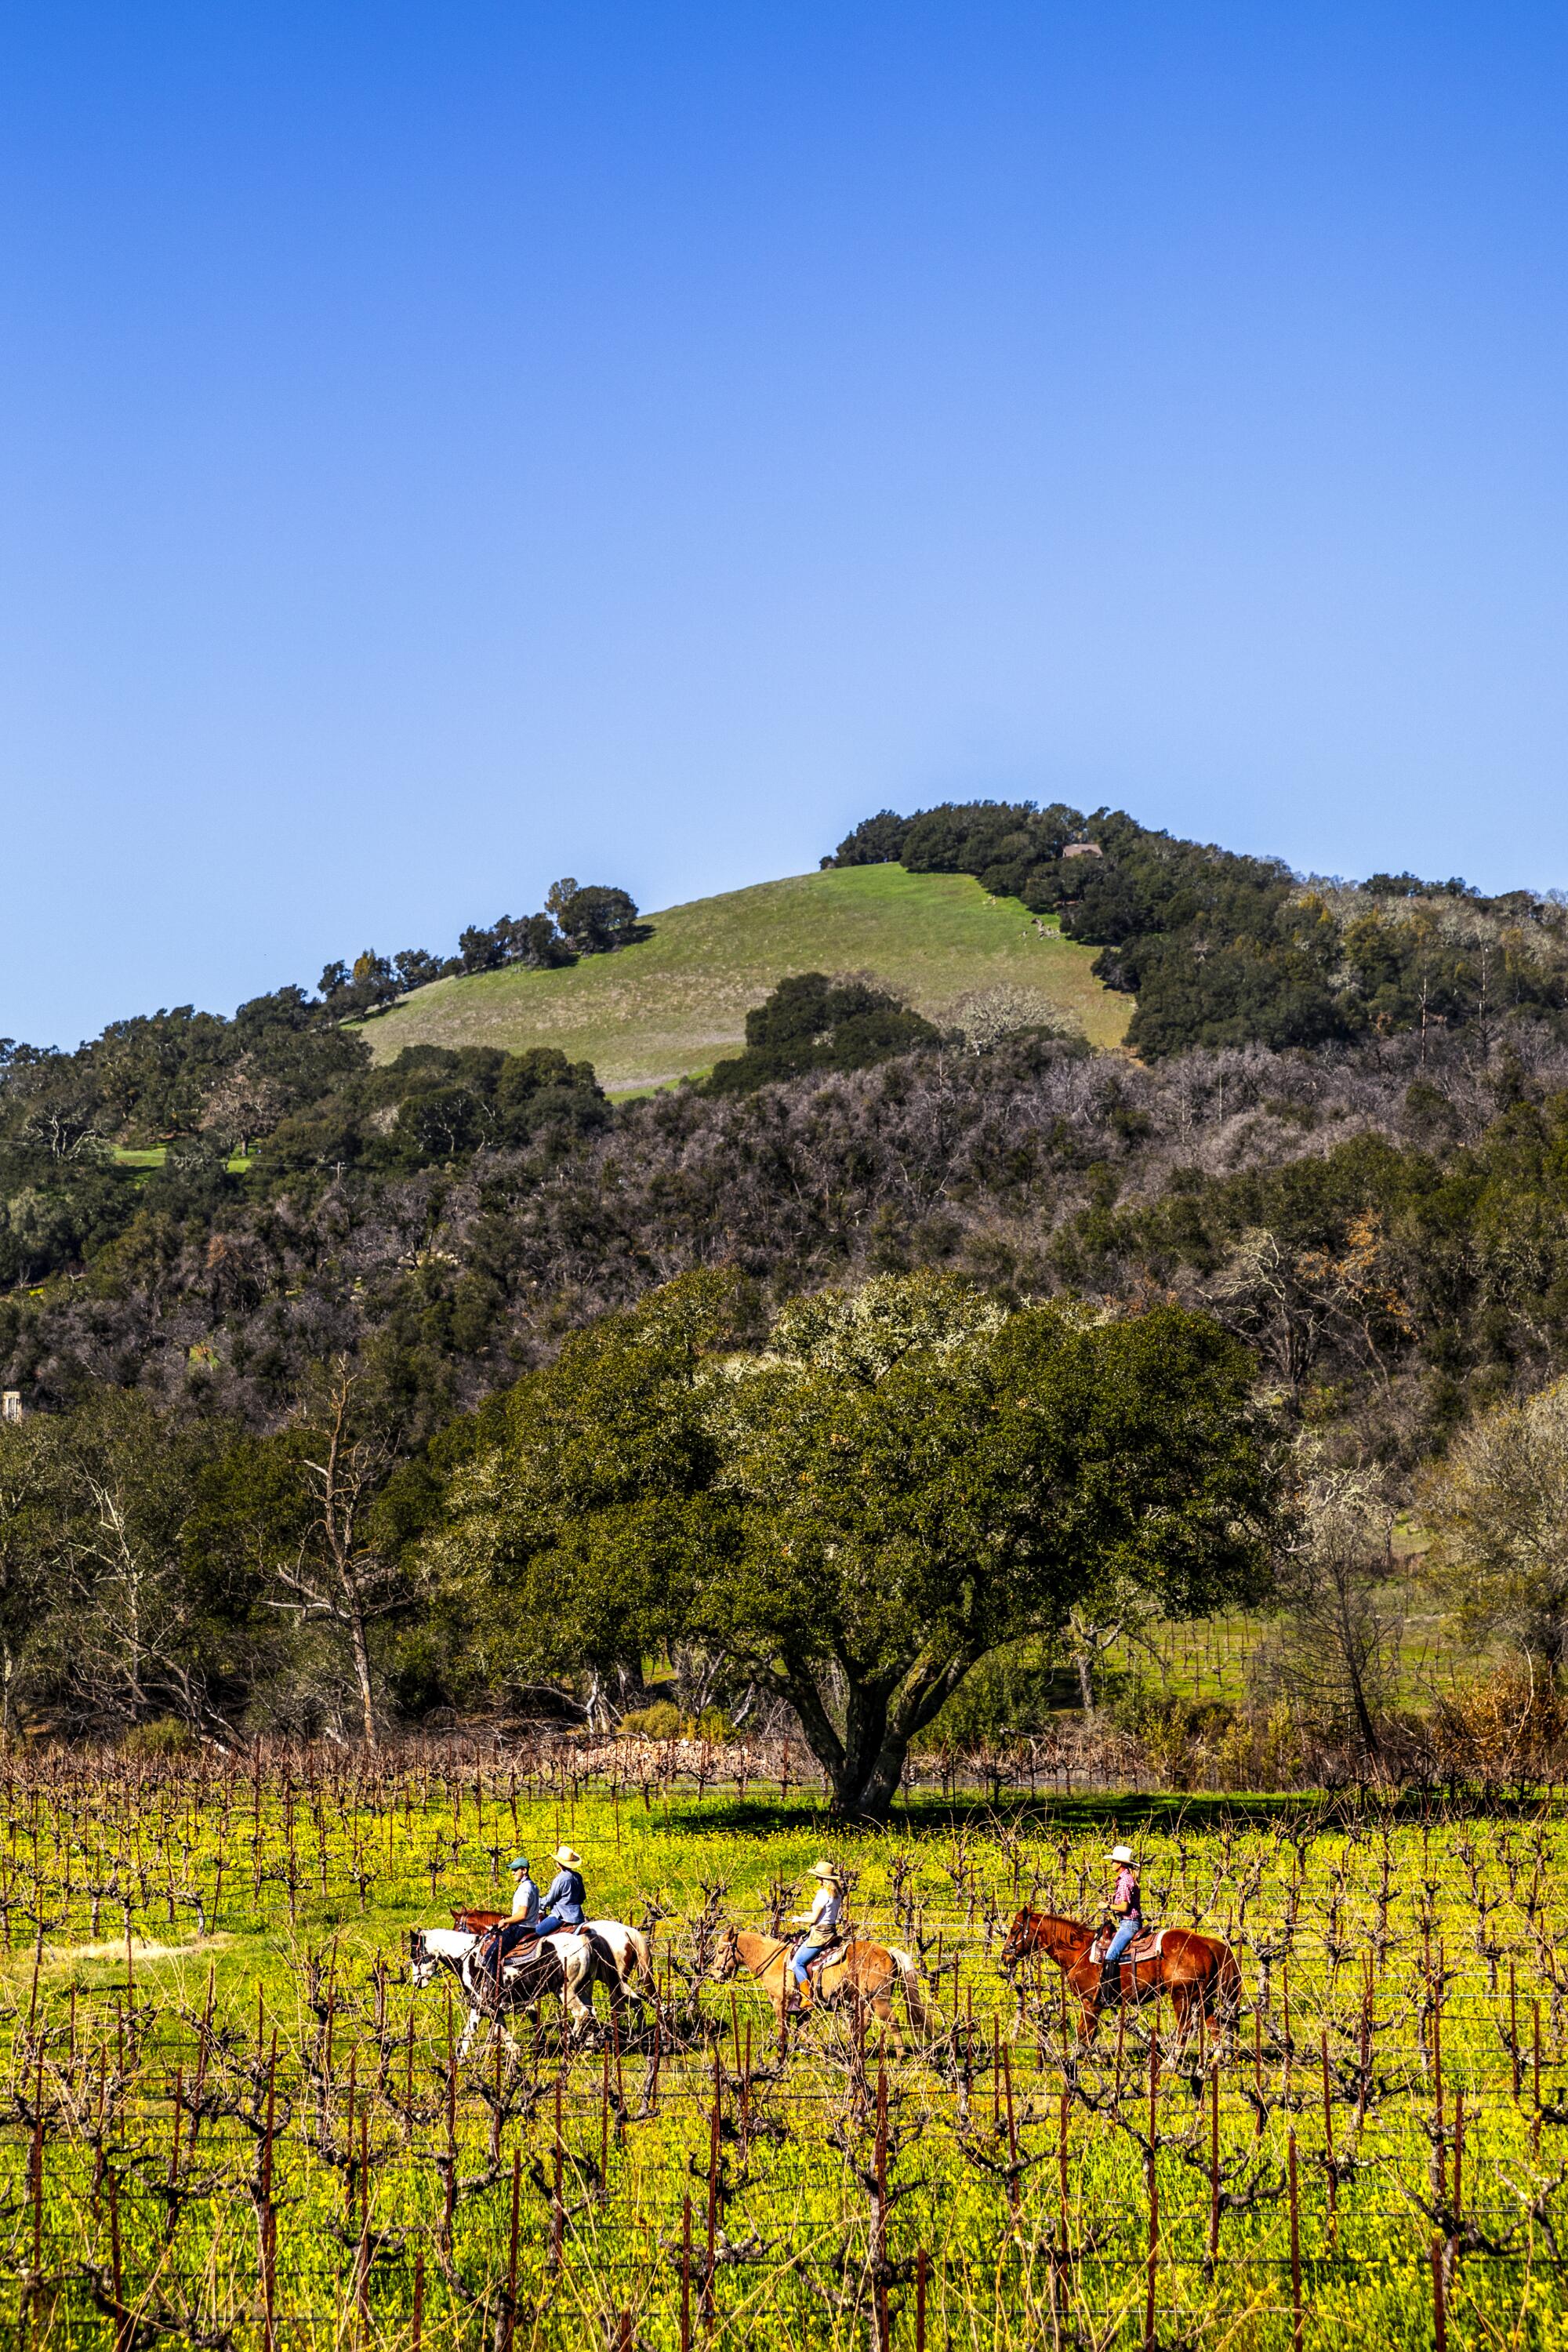 People ride horses through a vineyard.